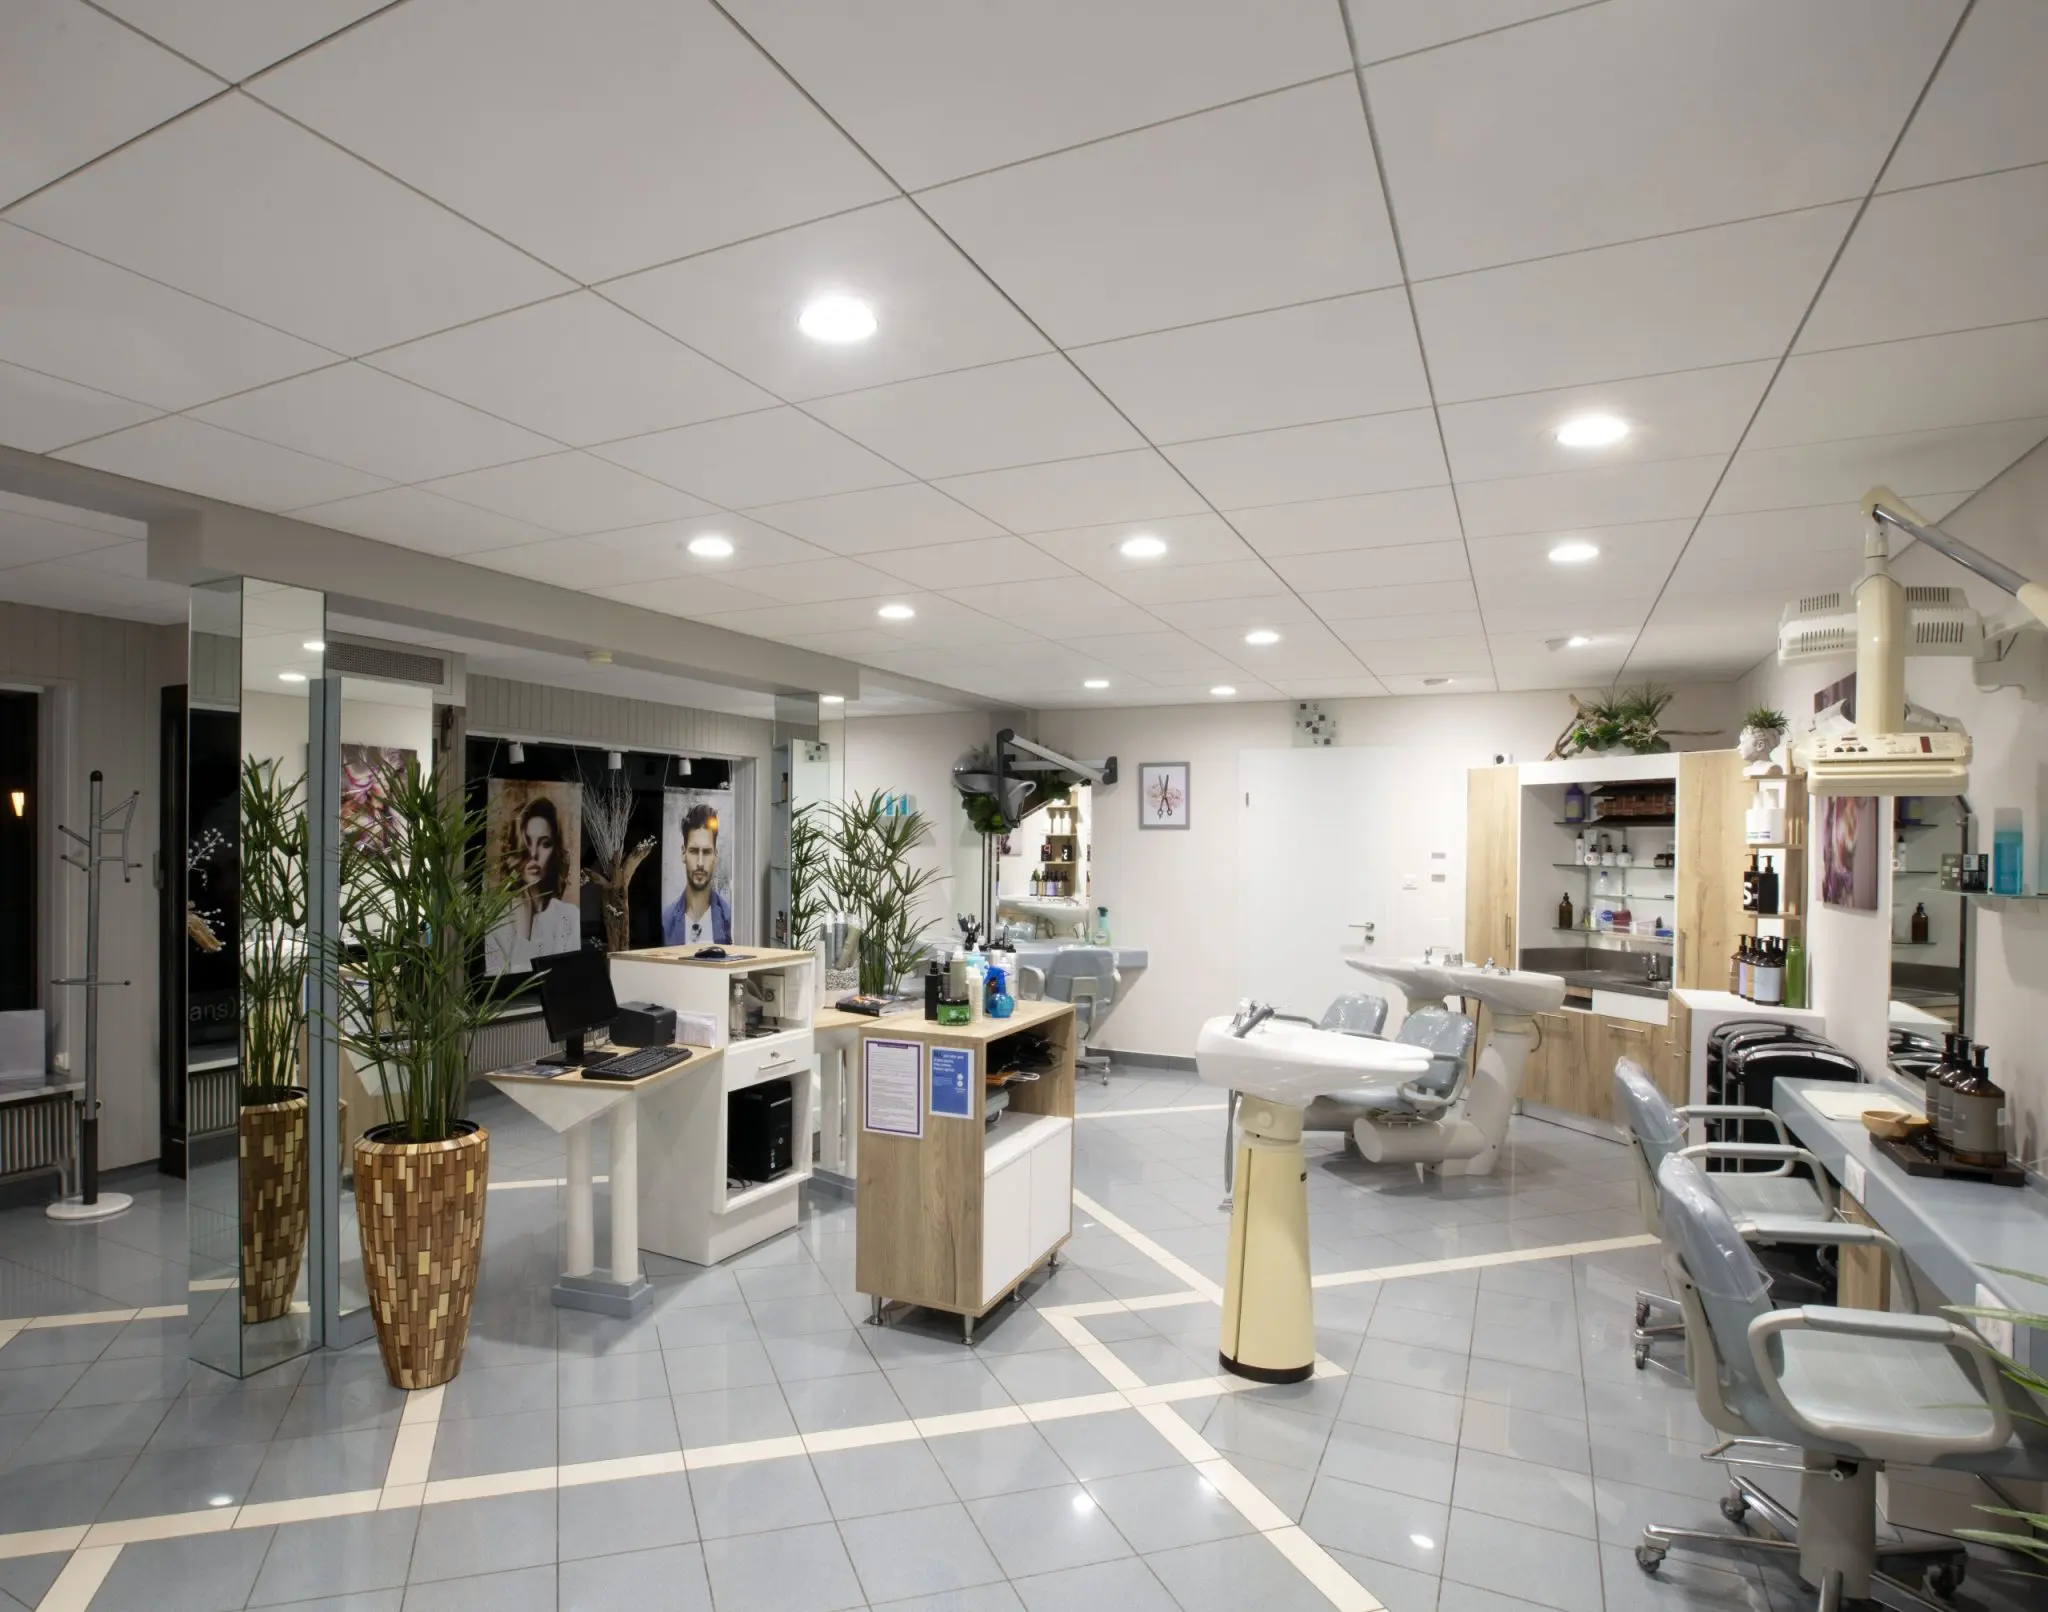 ACS Coiffure - Salon de coiffure à Geispolsheim